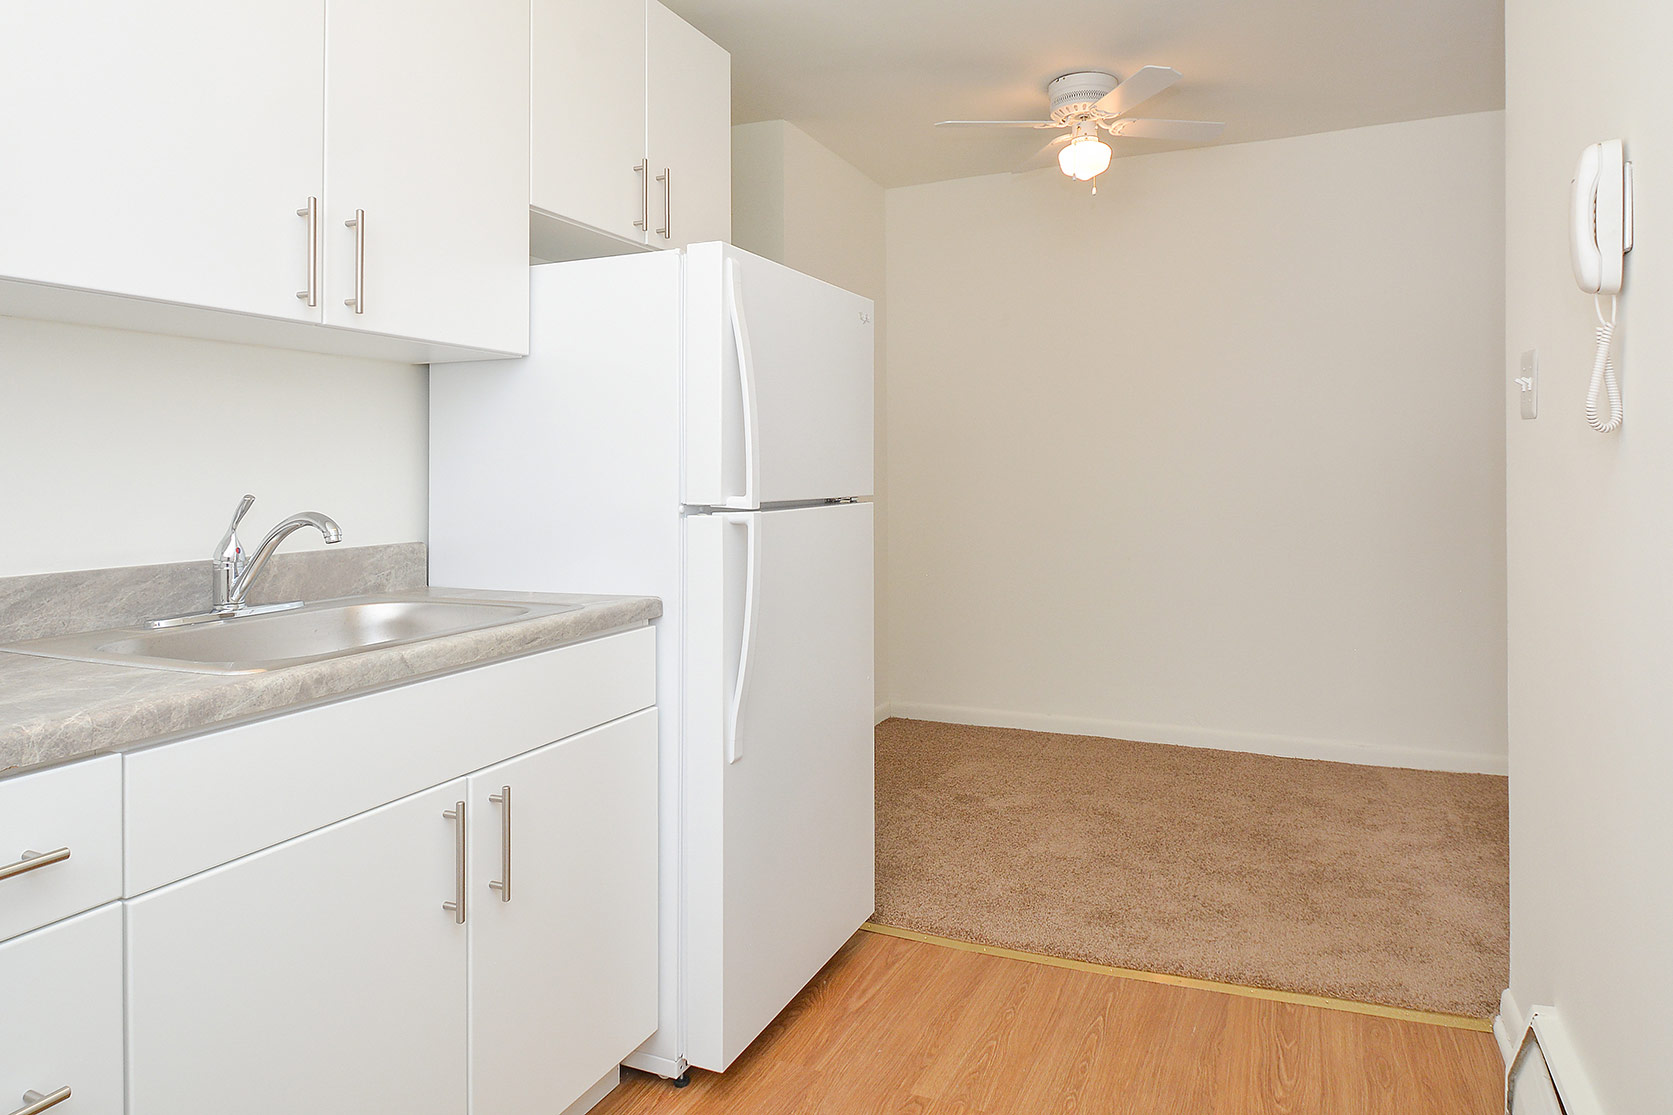 Woodview Apartments kitchen with white appliances